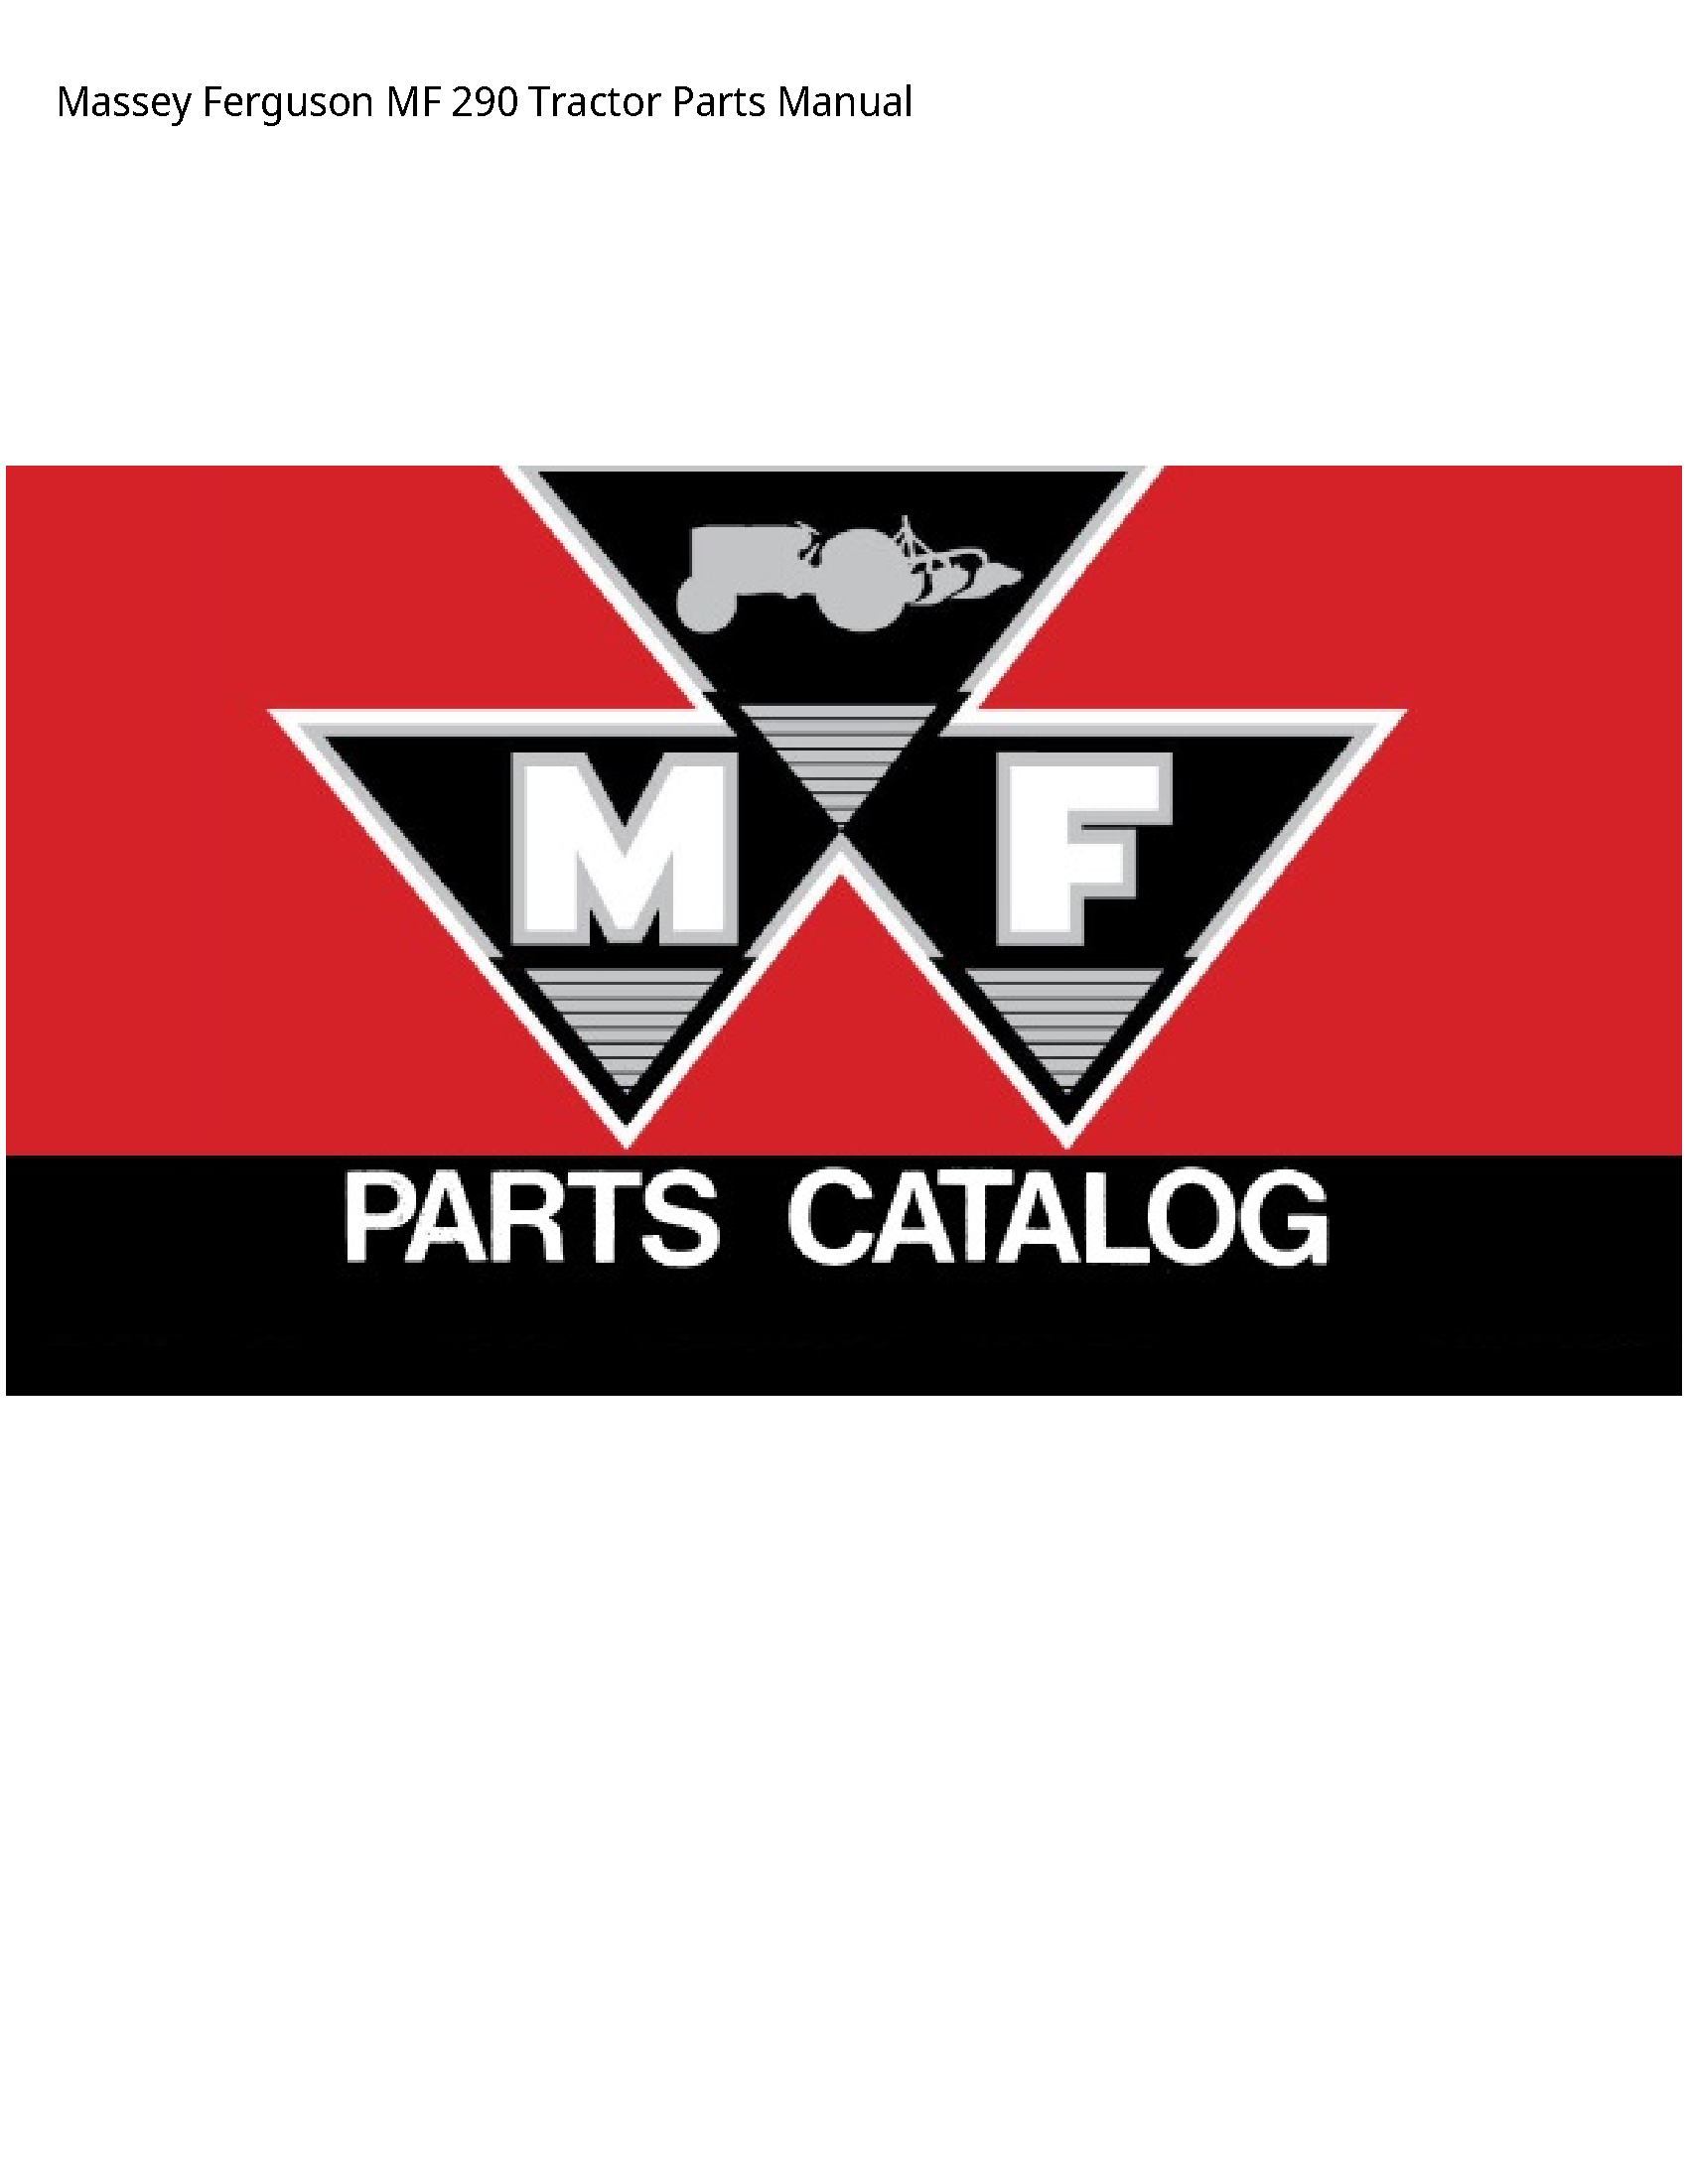 Massey Ferguson 290 MF Tractor Parts manual